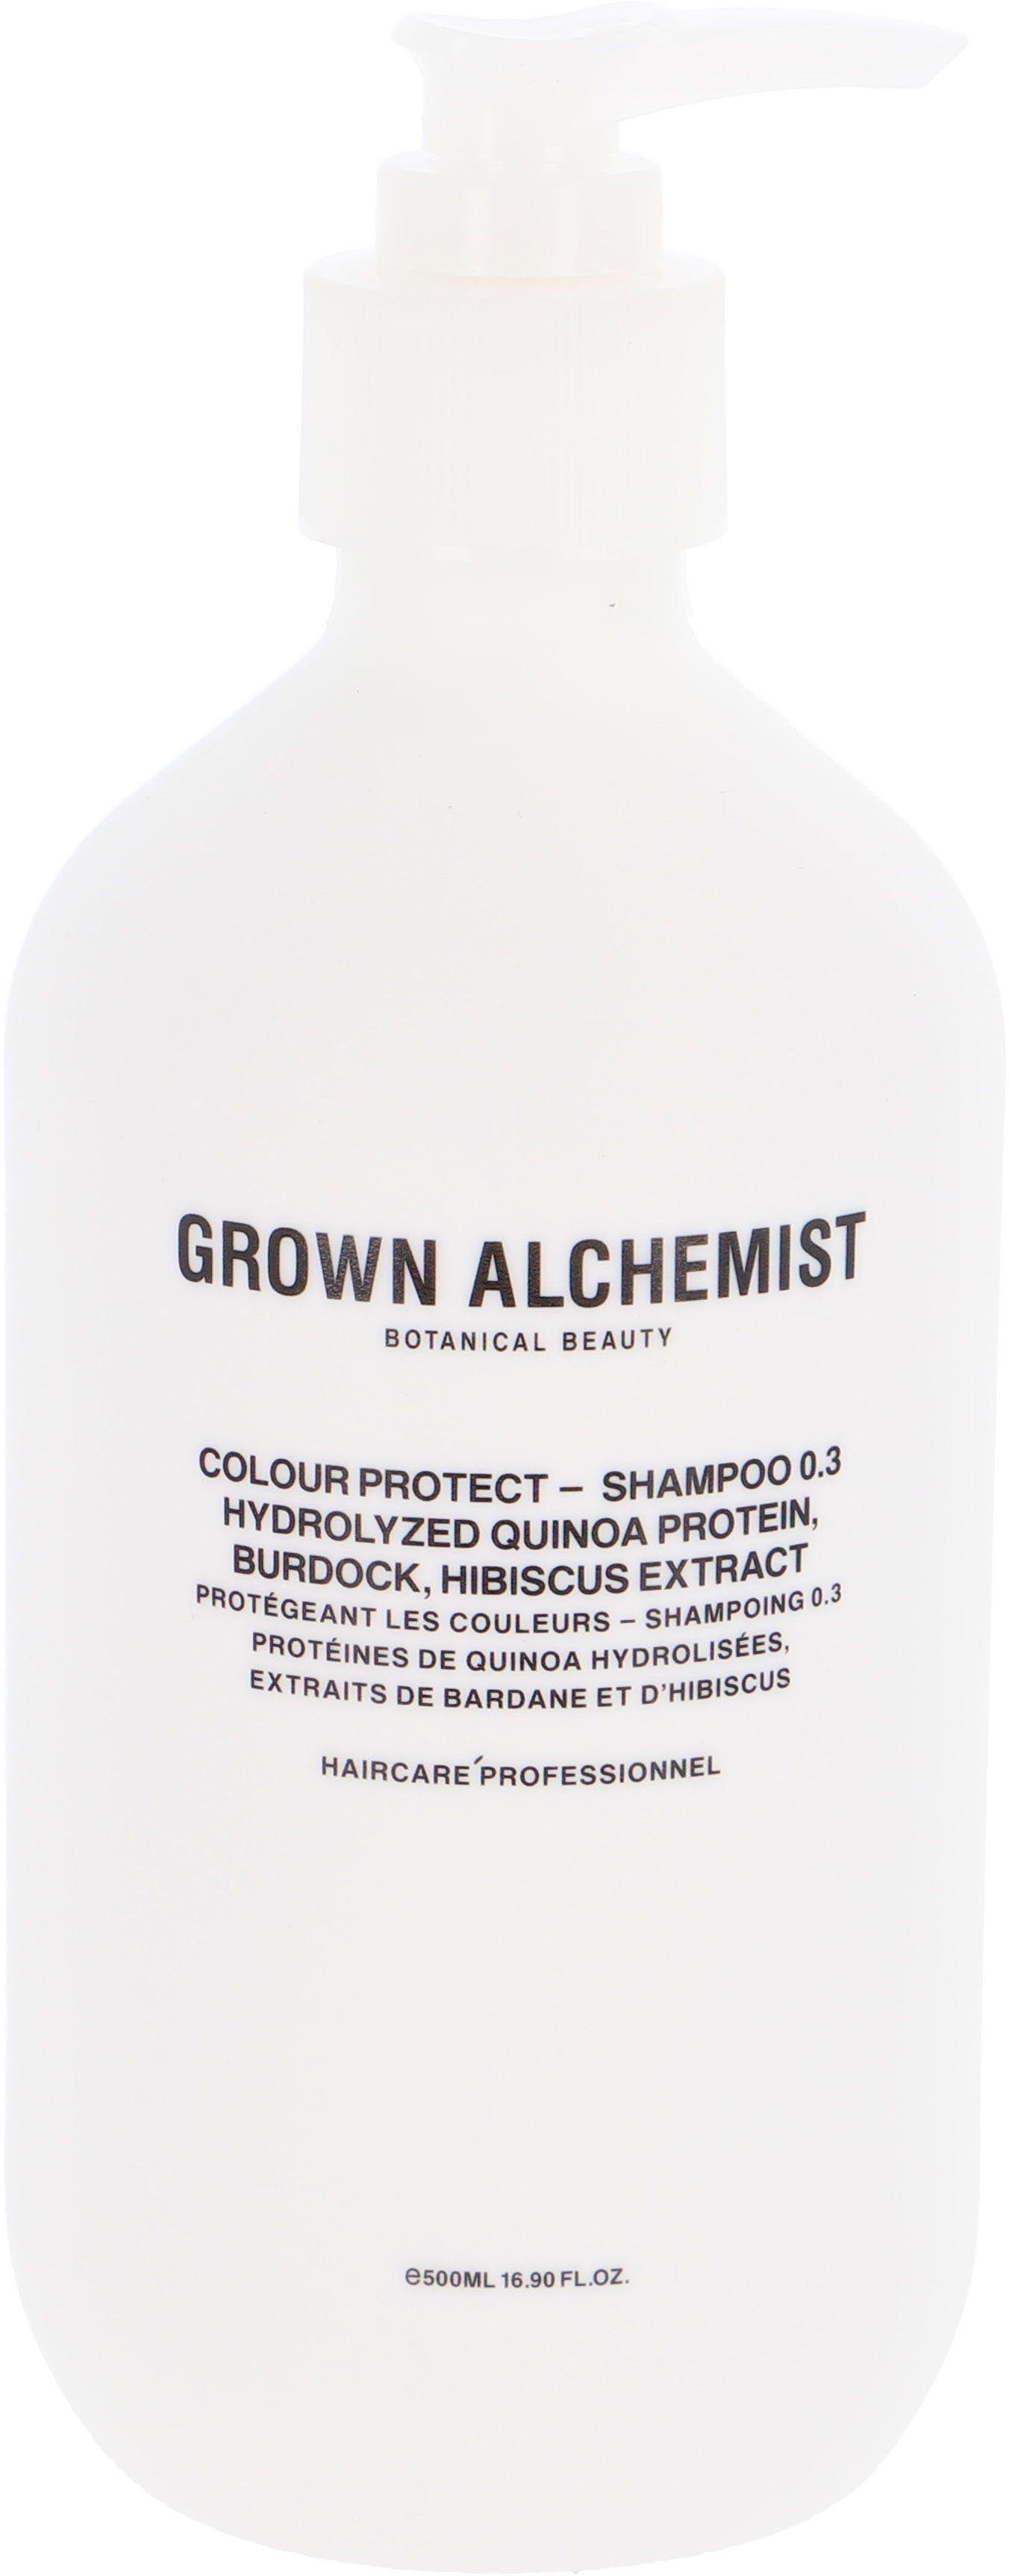 0.3, Haarshampoo - Protect ALCHEMIST Hibiscus Protein, GROWN Quinoa Shampoo Burdock, Extract Hydrolyzed Colour